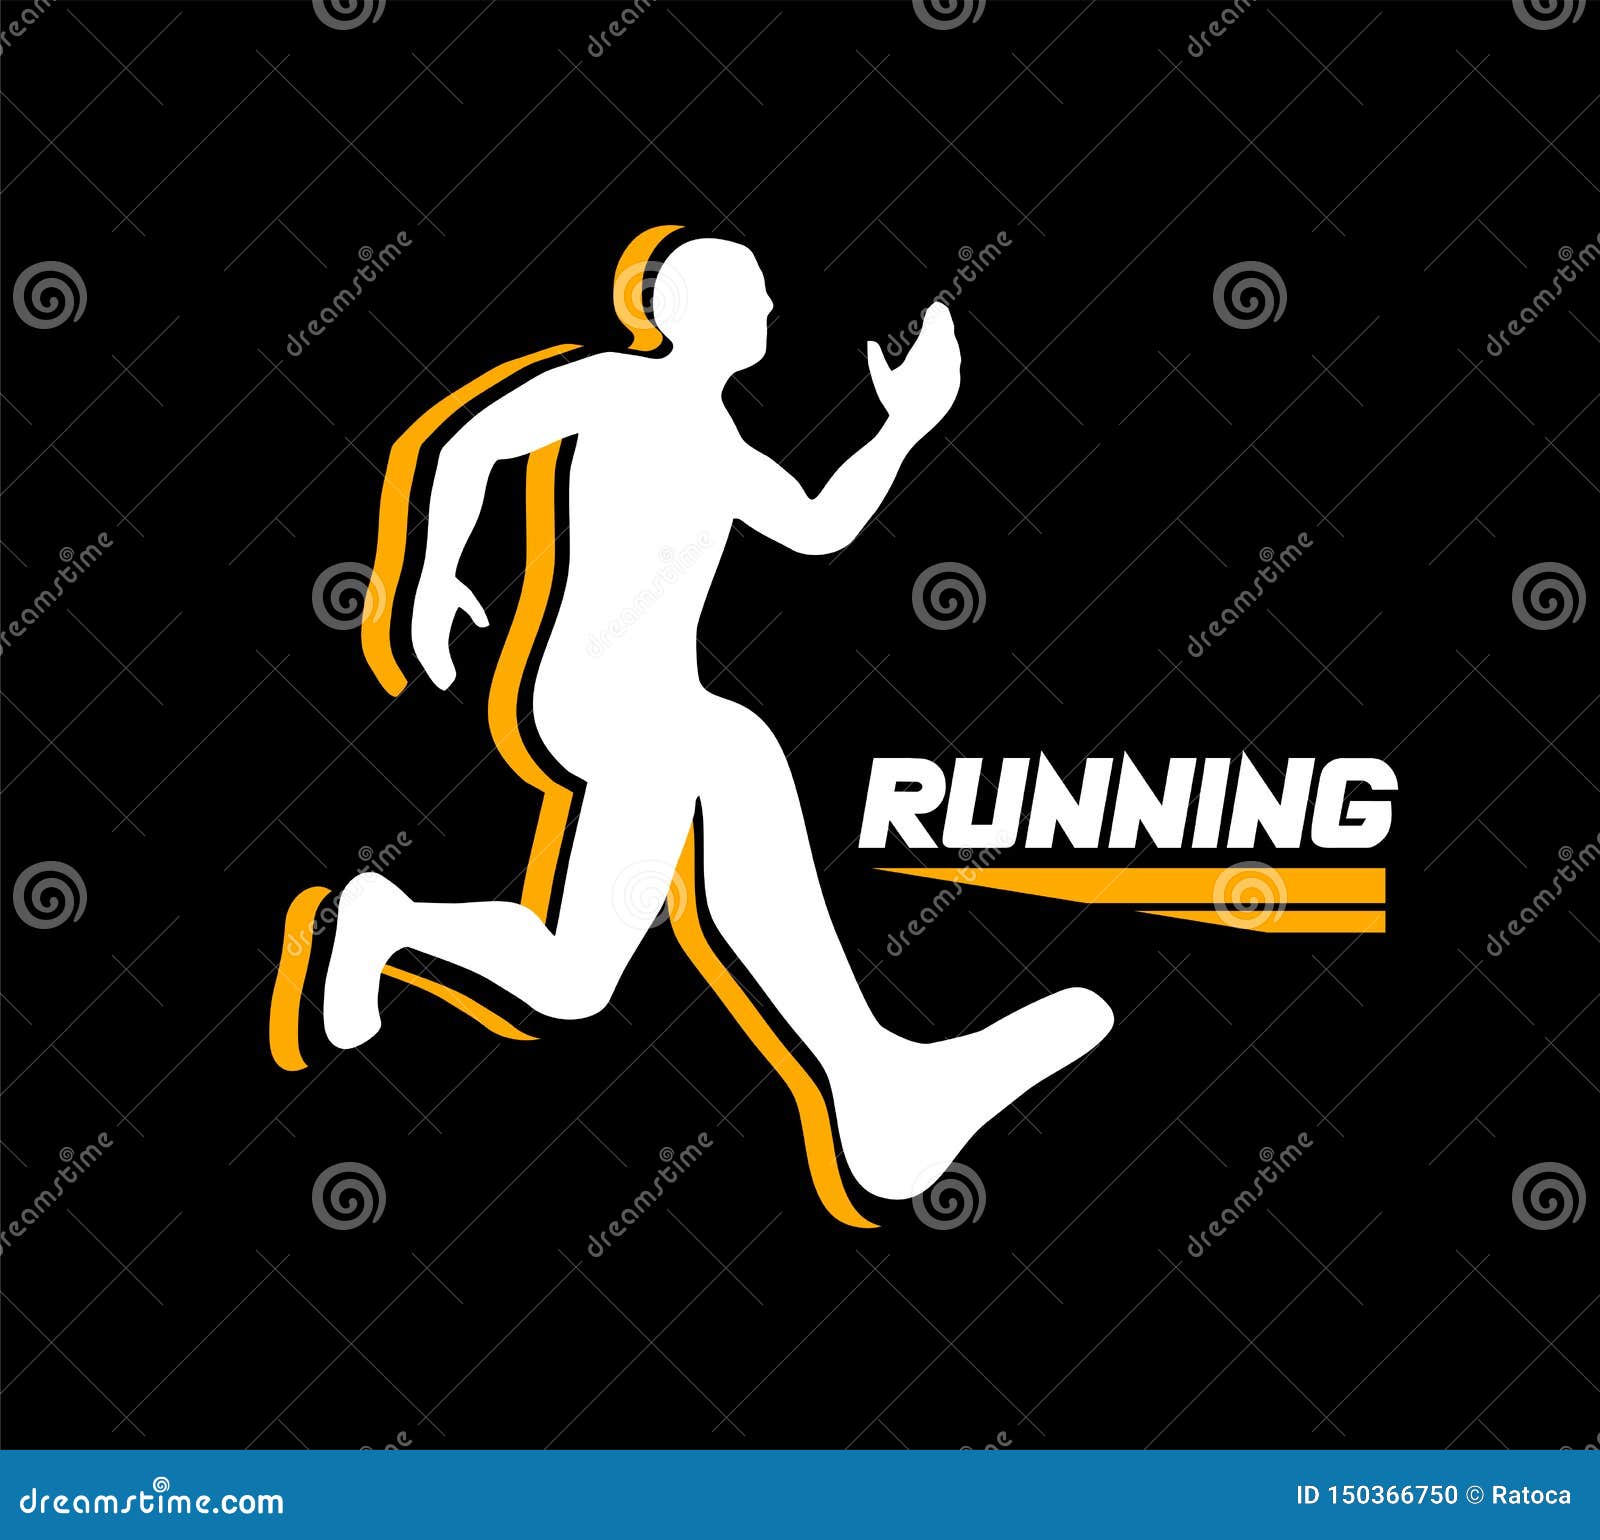 Runner symbol design stock vector. Illustration of marathon - 150366750